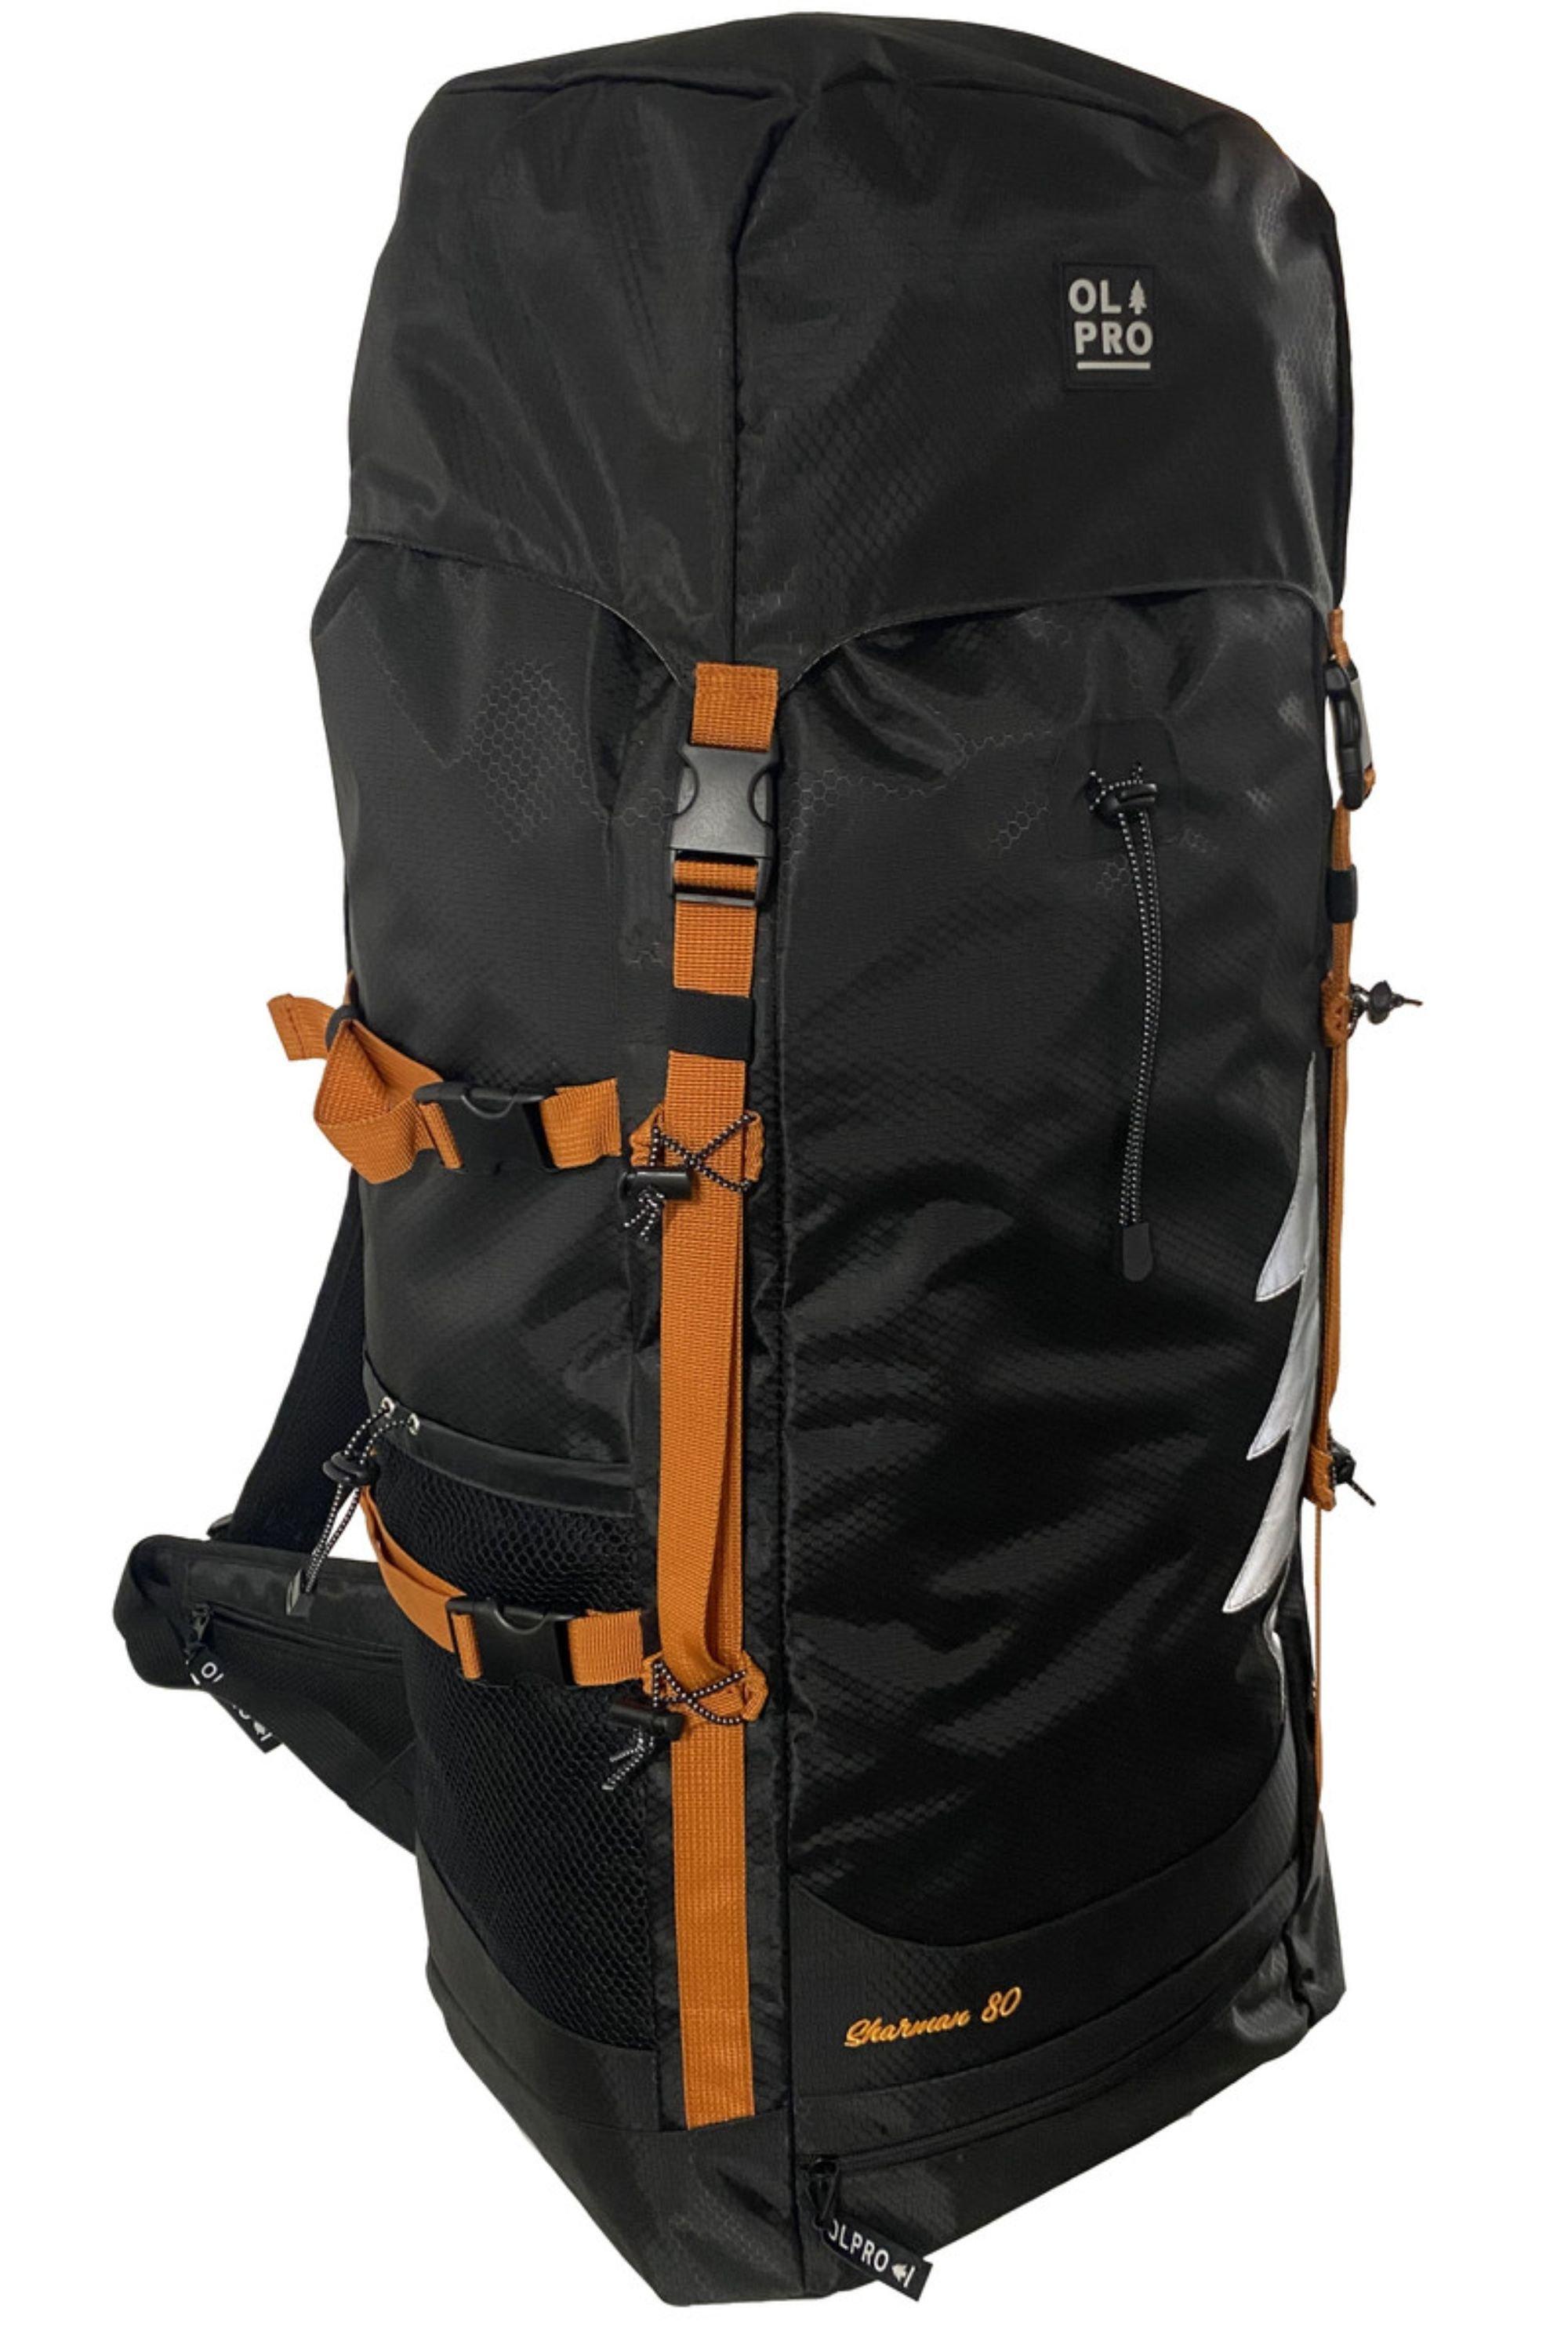 OLPRO 80L Rucksack Bag Black